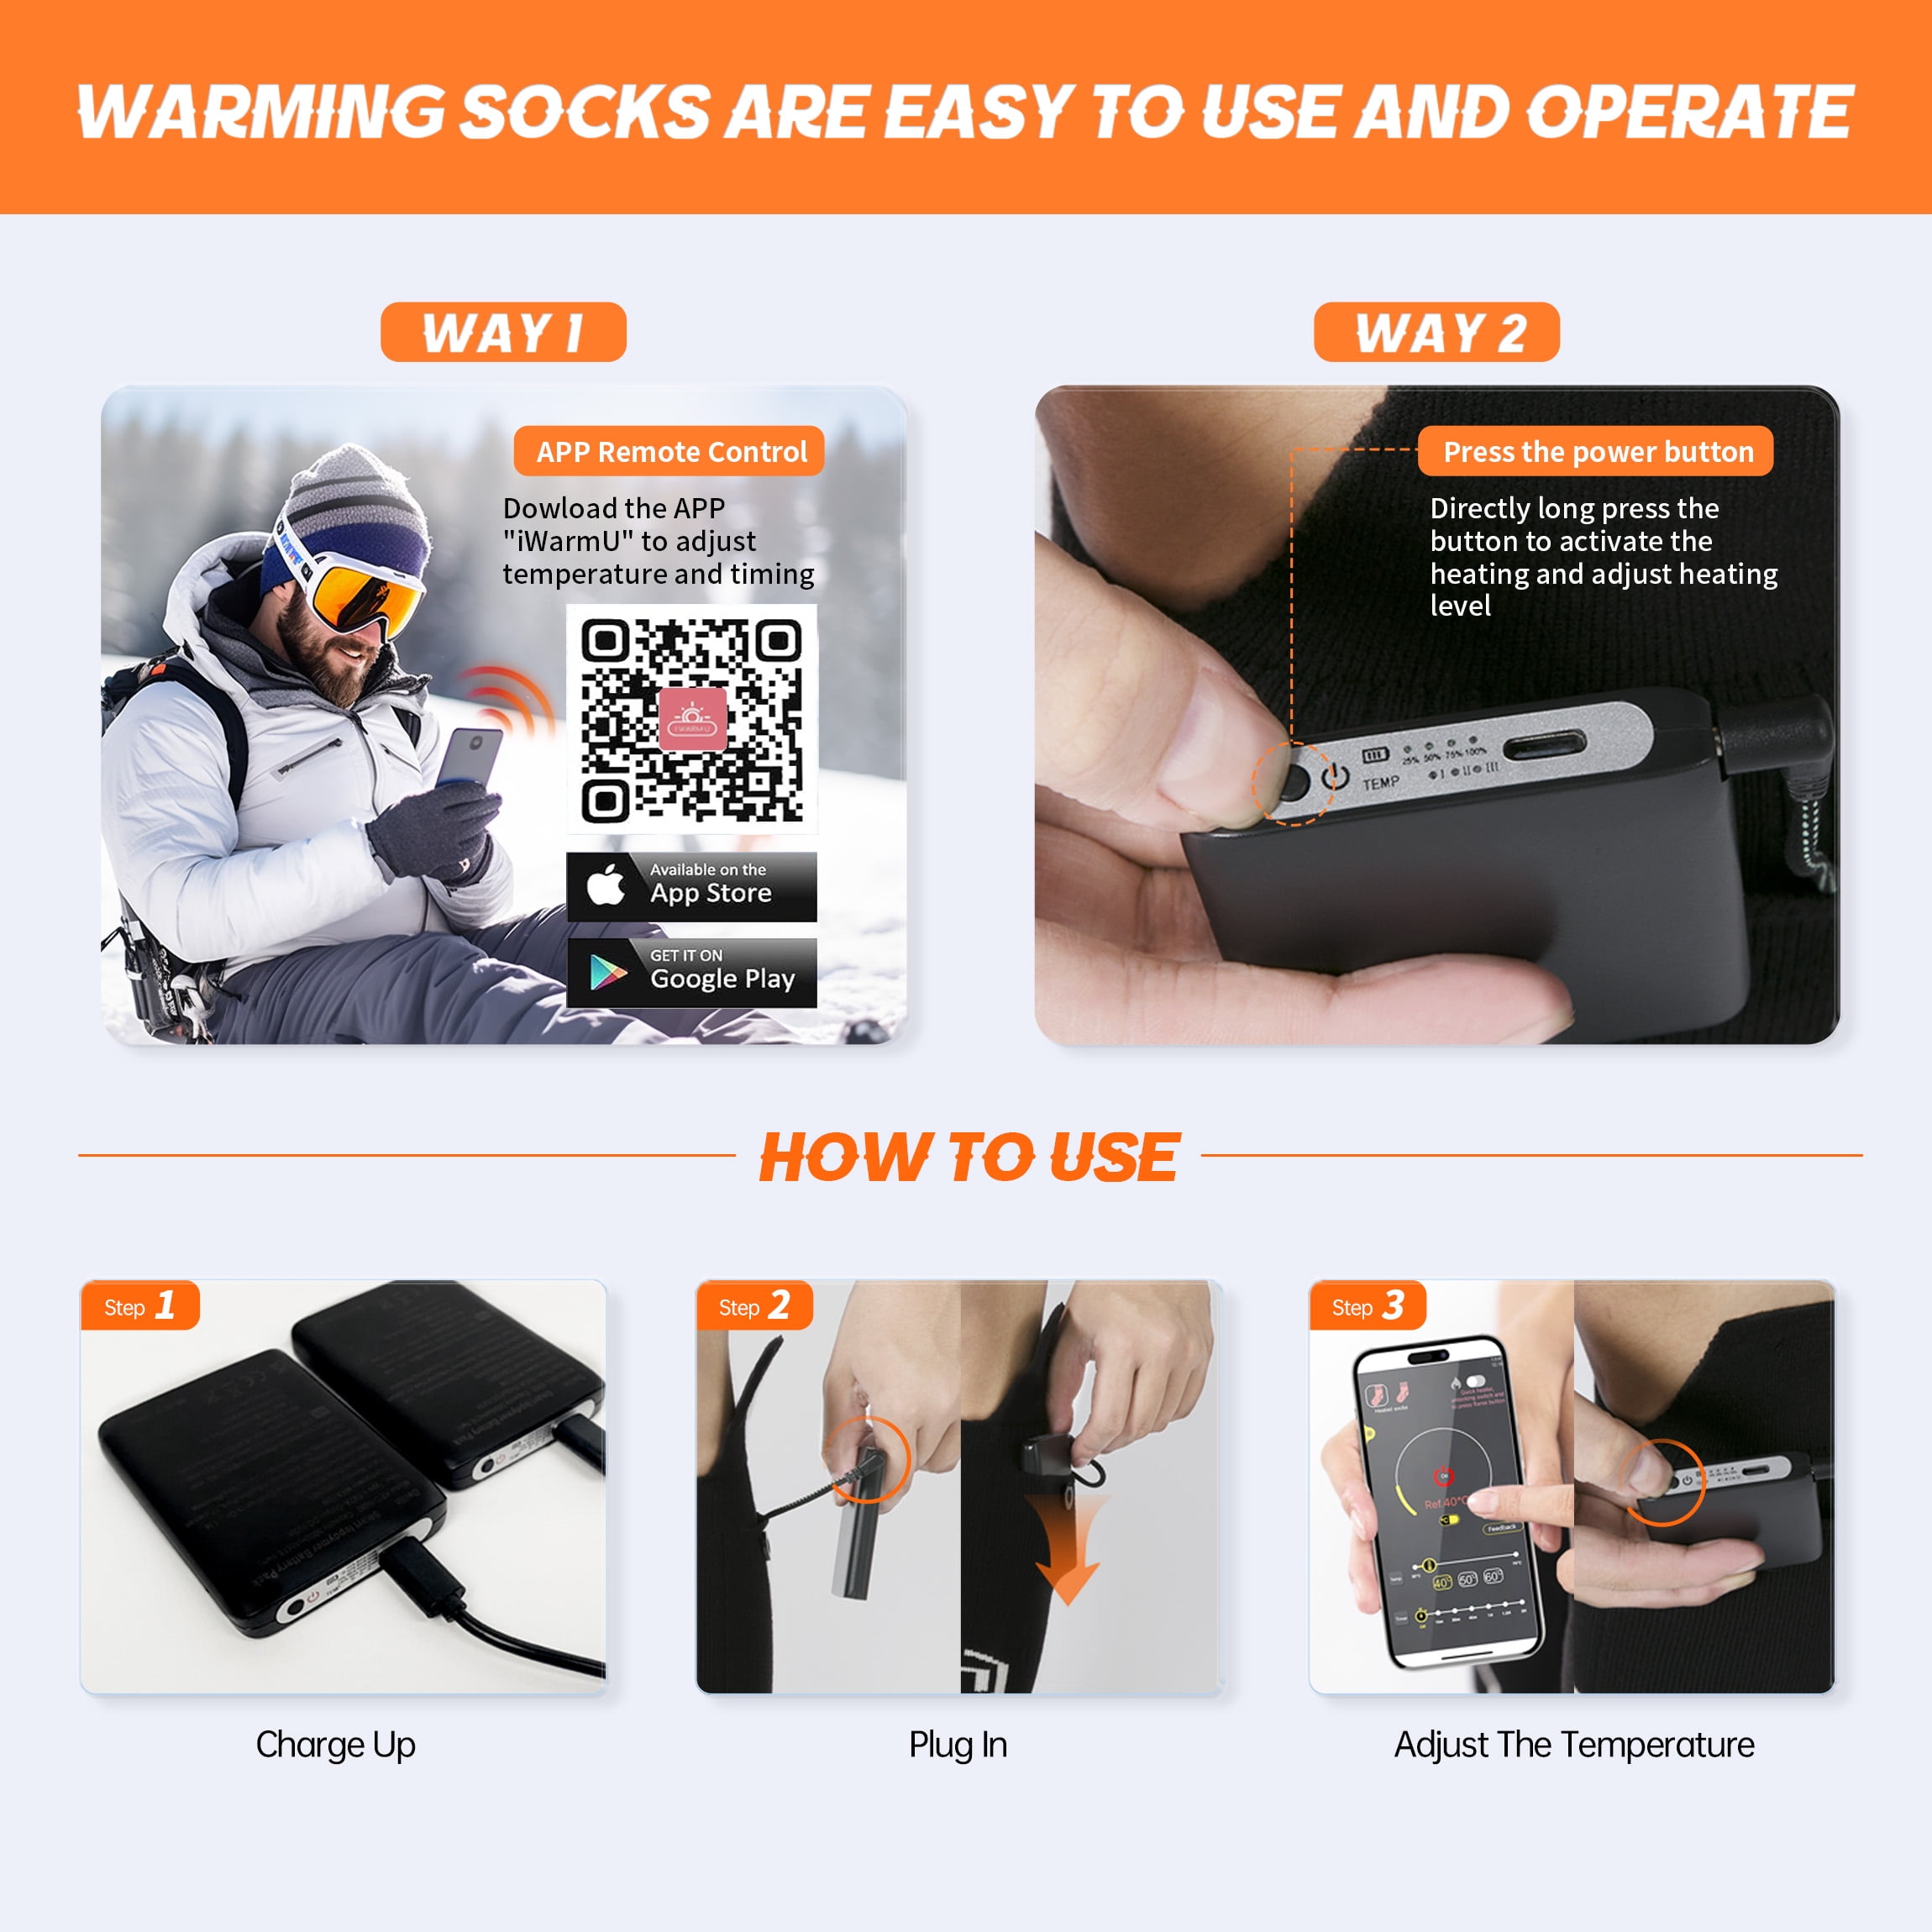 ExpanTech Stretch Tech Men's Tab Back Socks 3 Pairs White - Nn+